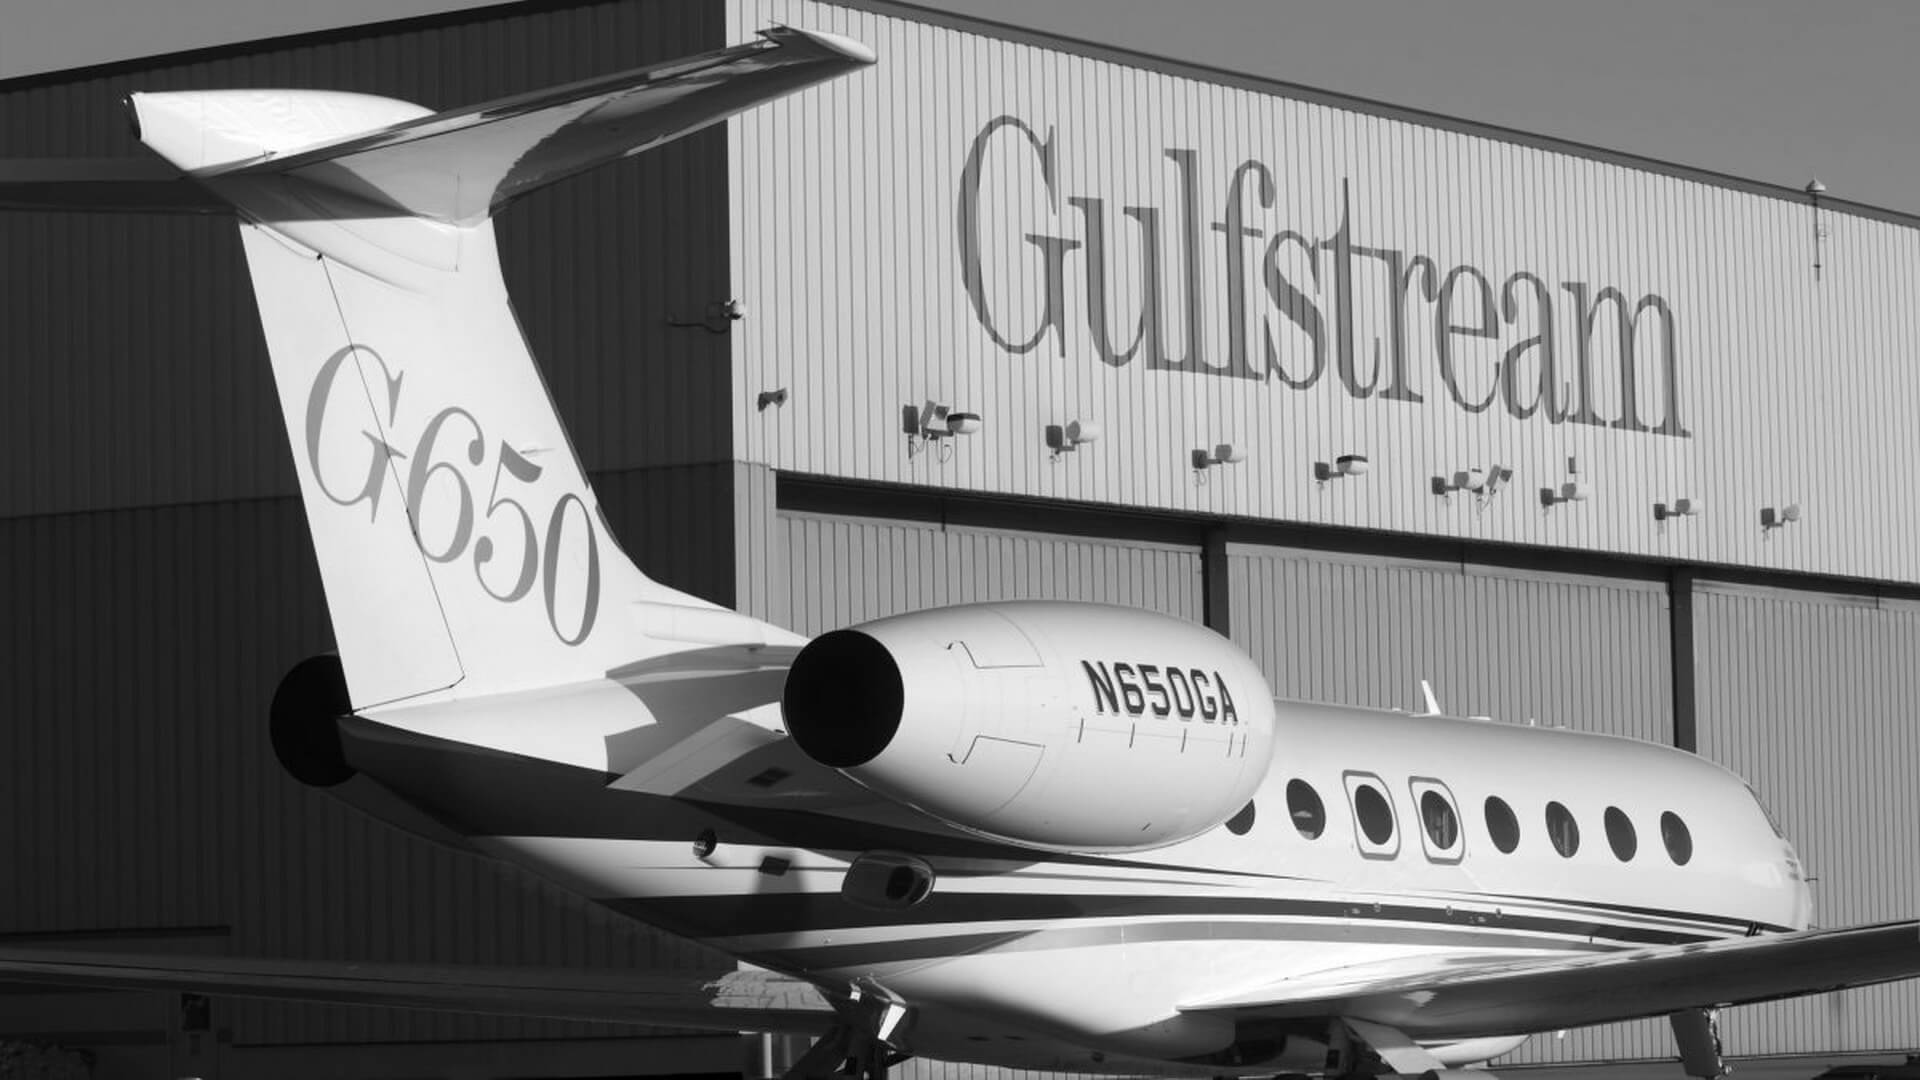 Gulfstream G650 Aircraft Parked by Hangar